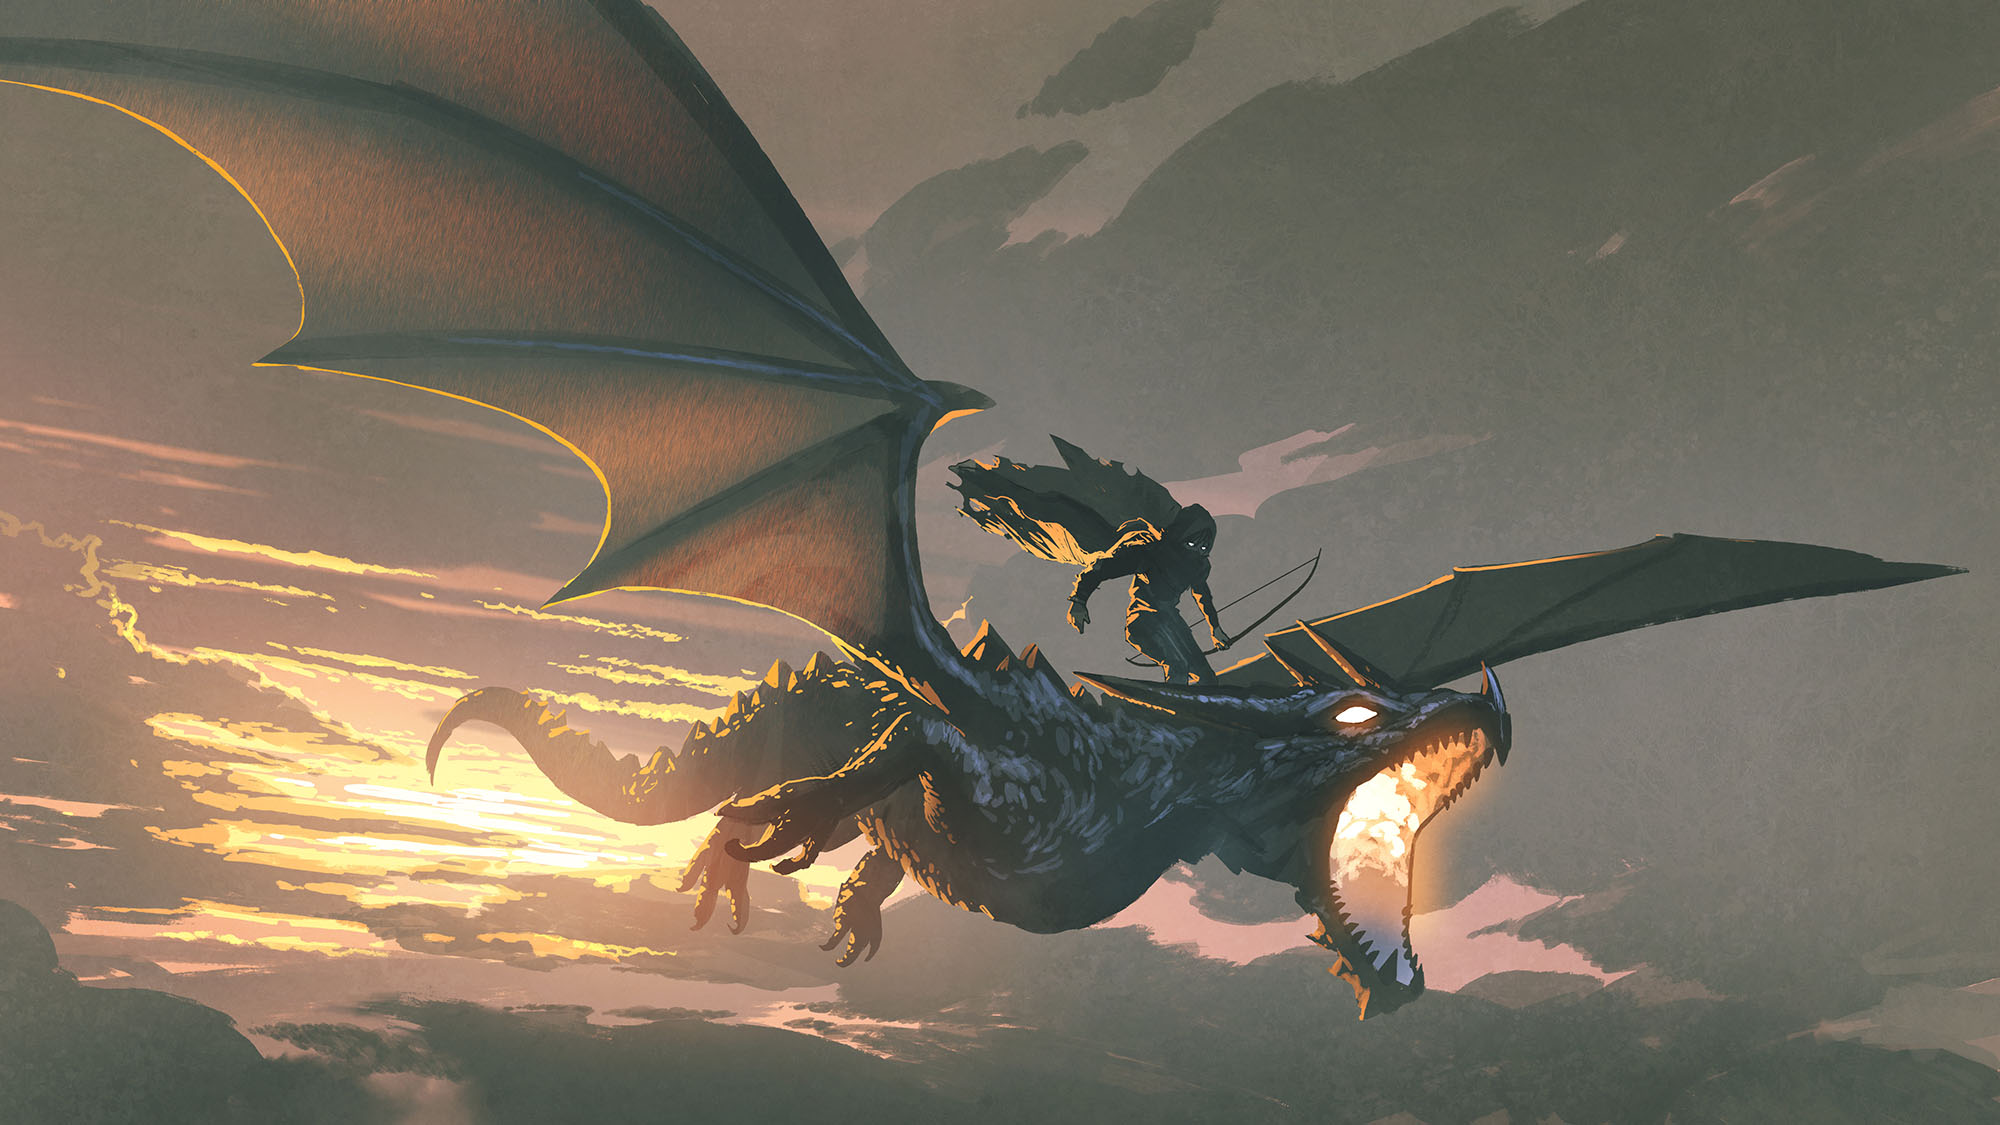 Black Knight Riding a Dragon at Sunset - Tithi Luadthong